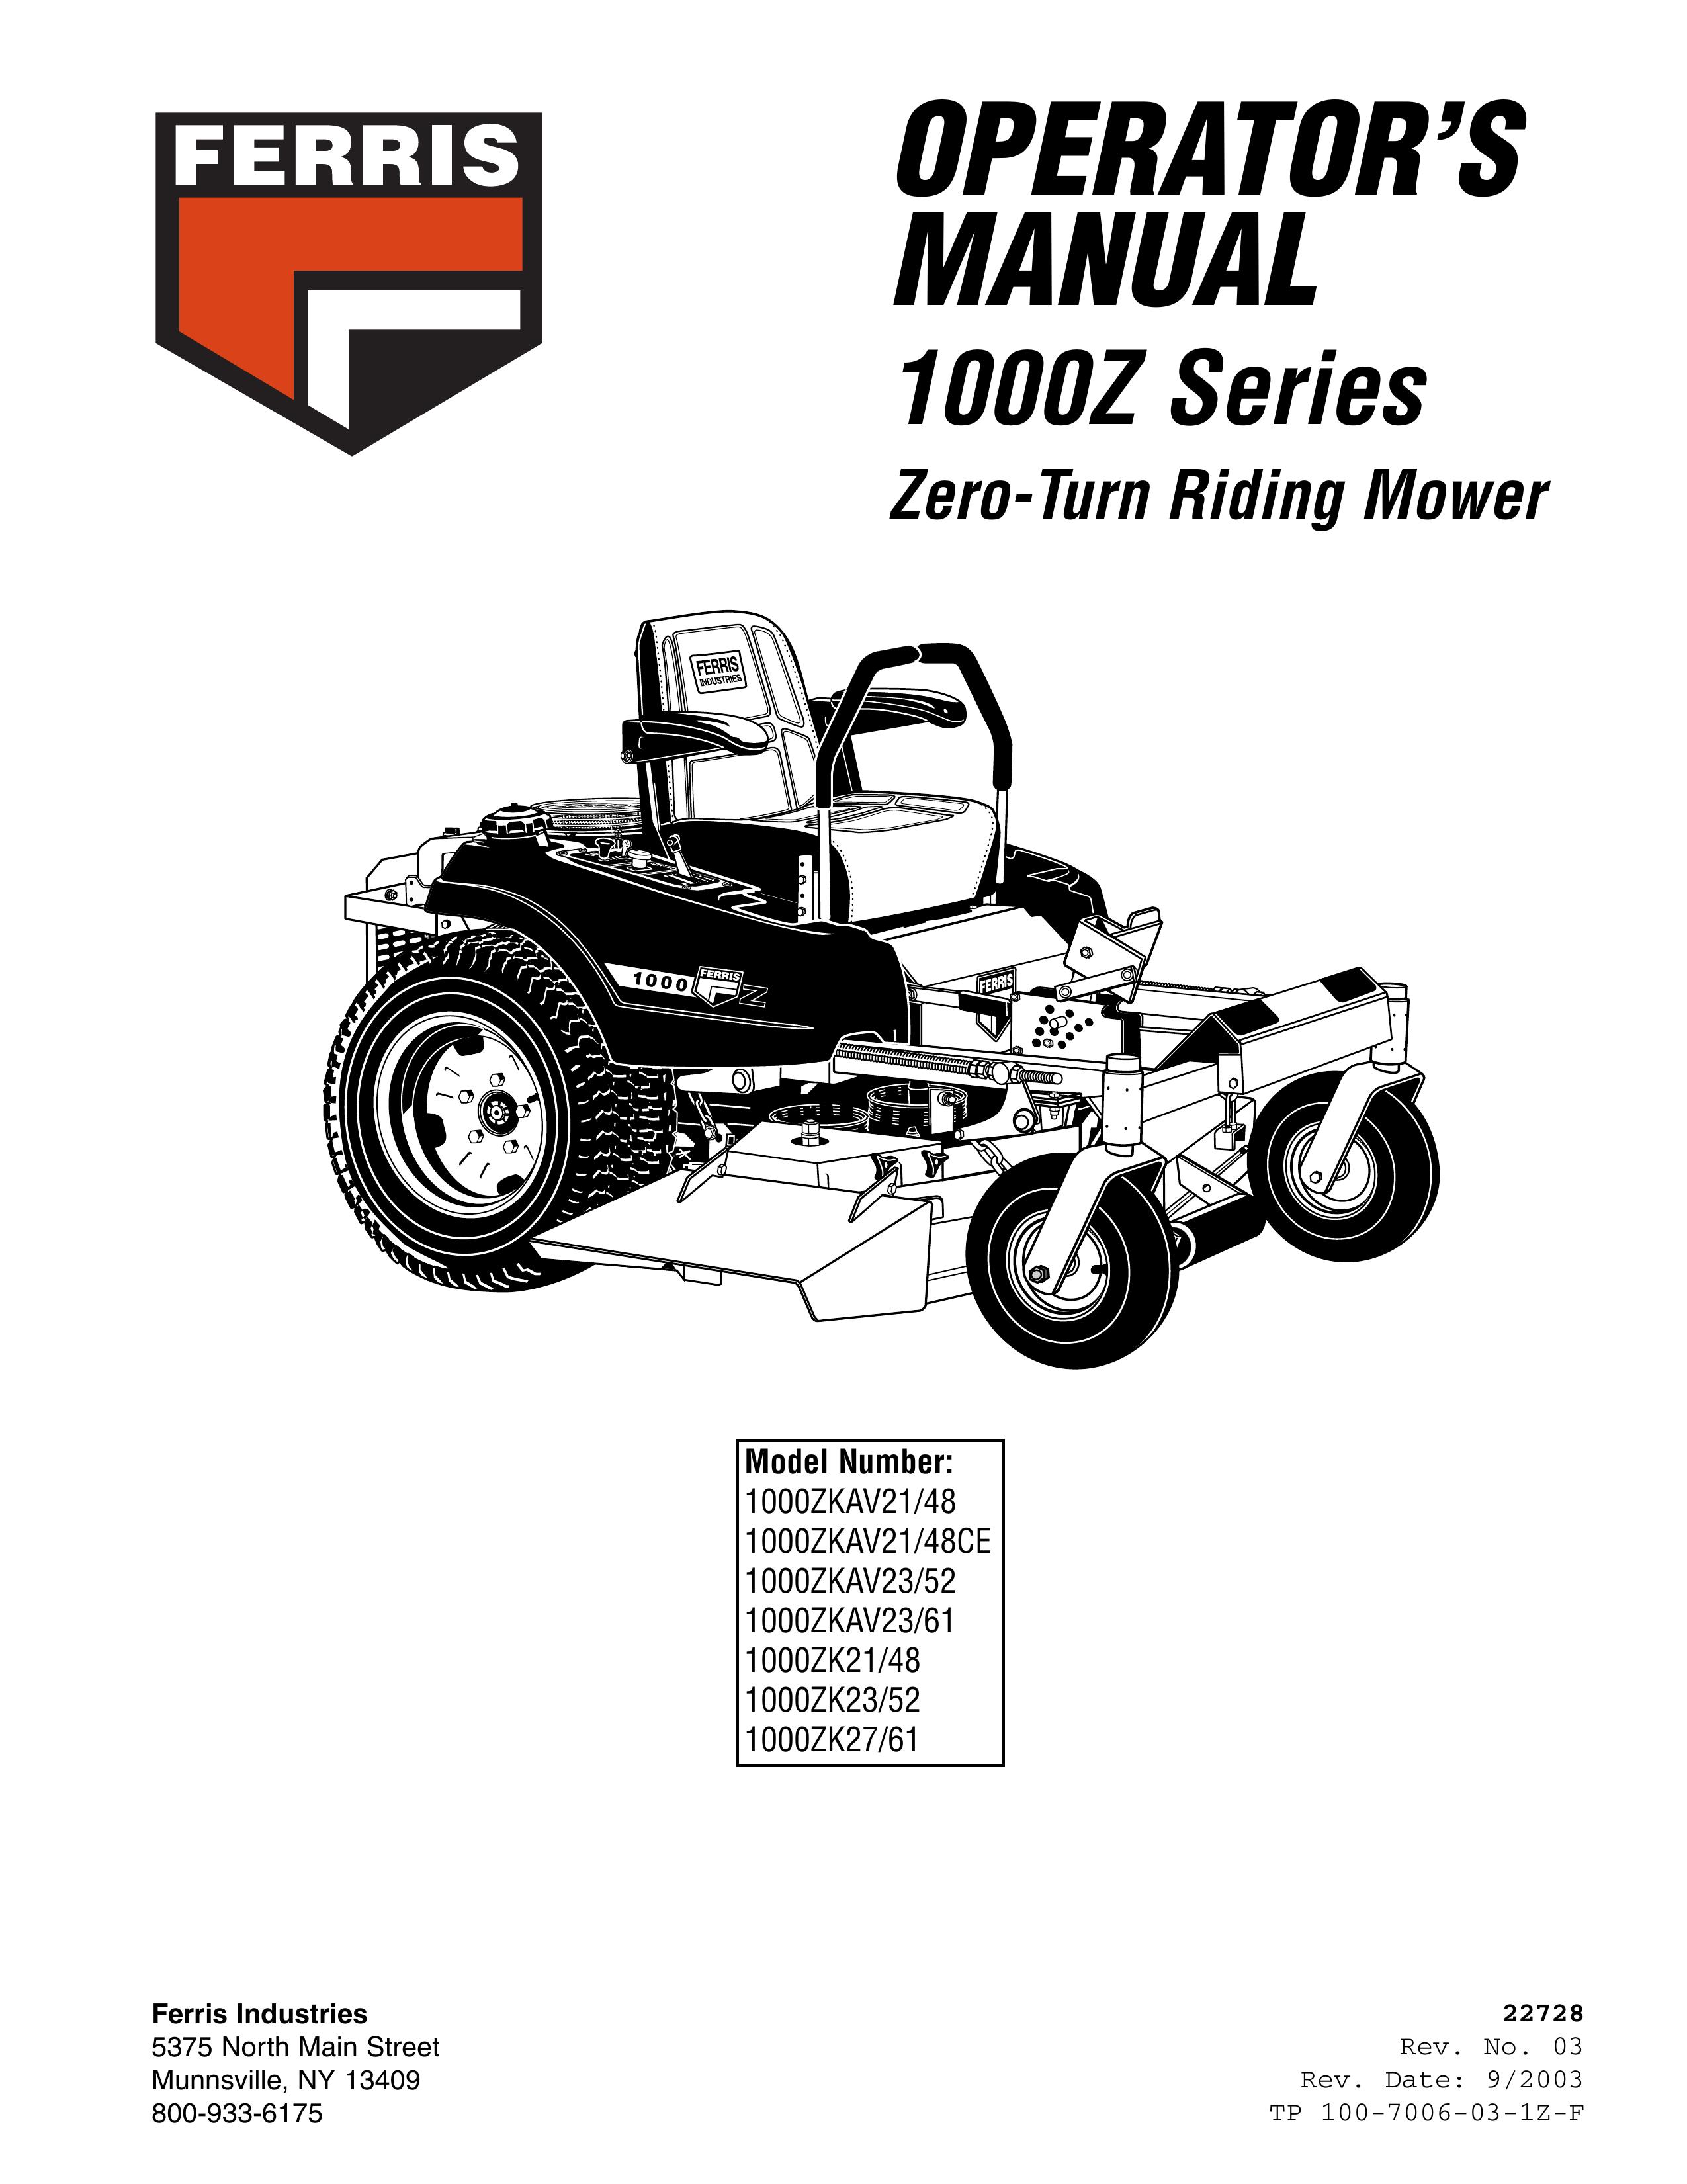 Ferris Industries 1000ZKAV23/52 Lawn Mower User Manual